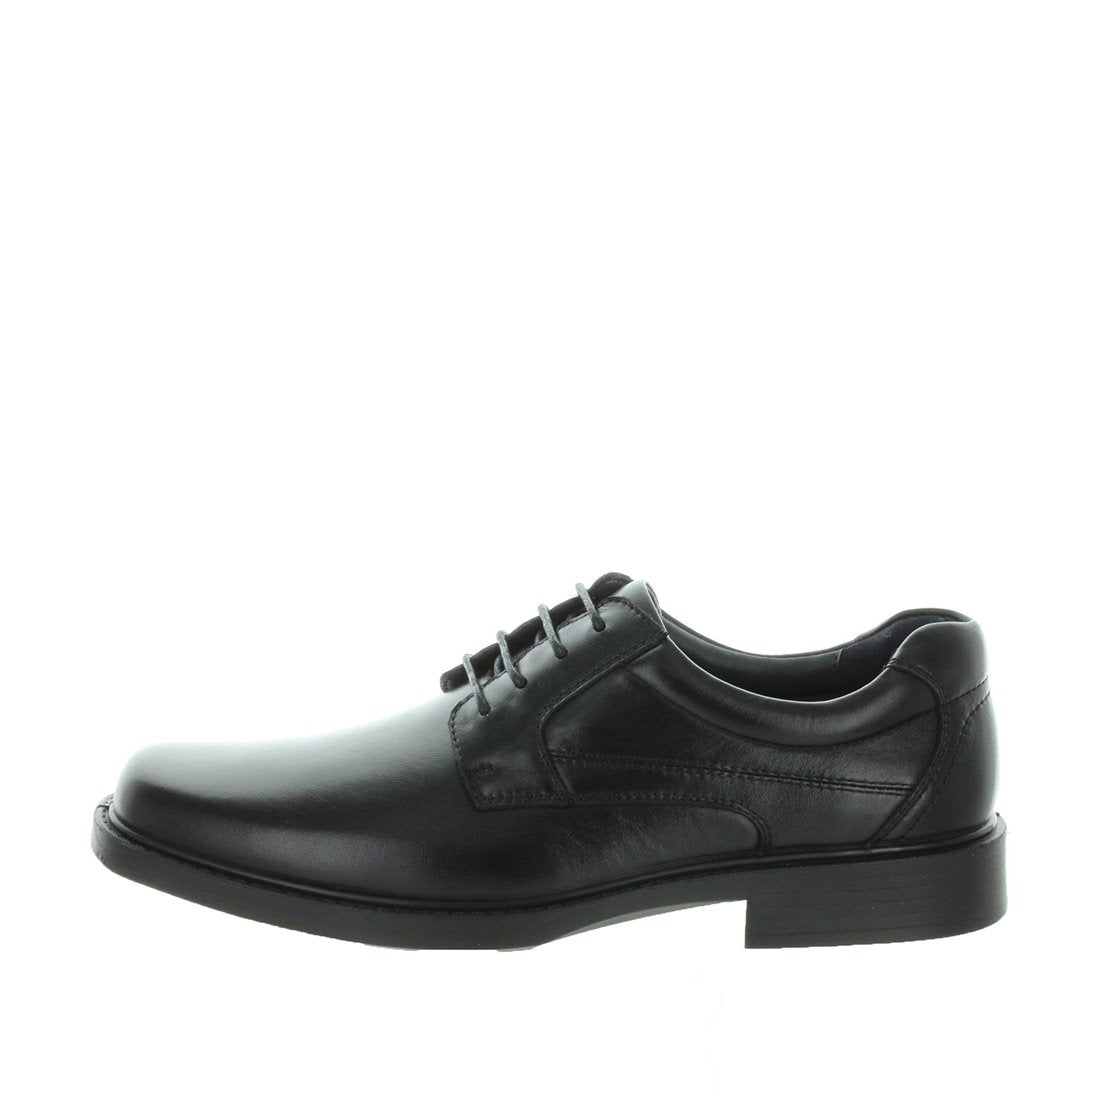 TOSTE by CHURCHILL - iShoes - Men's Shoes, Men's Shoes: Dress, School Shoes, School Shoes: Senior Boy's - FOOTWEAR-FOOTWEAR